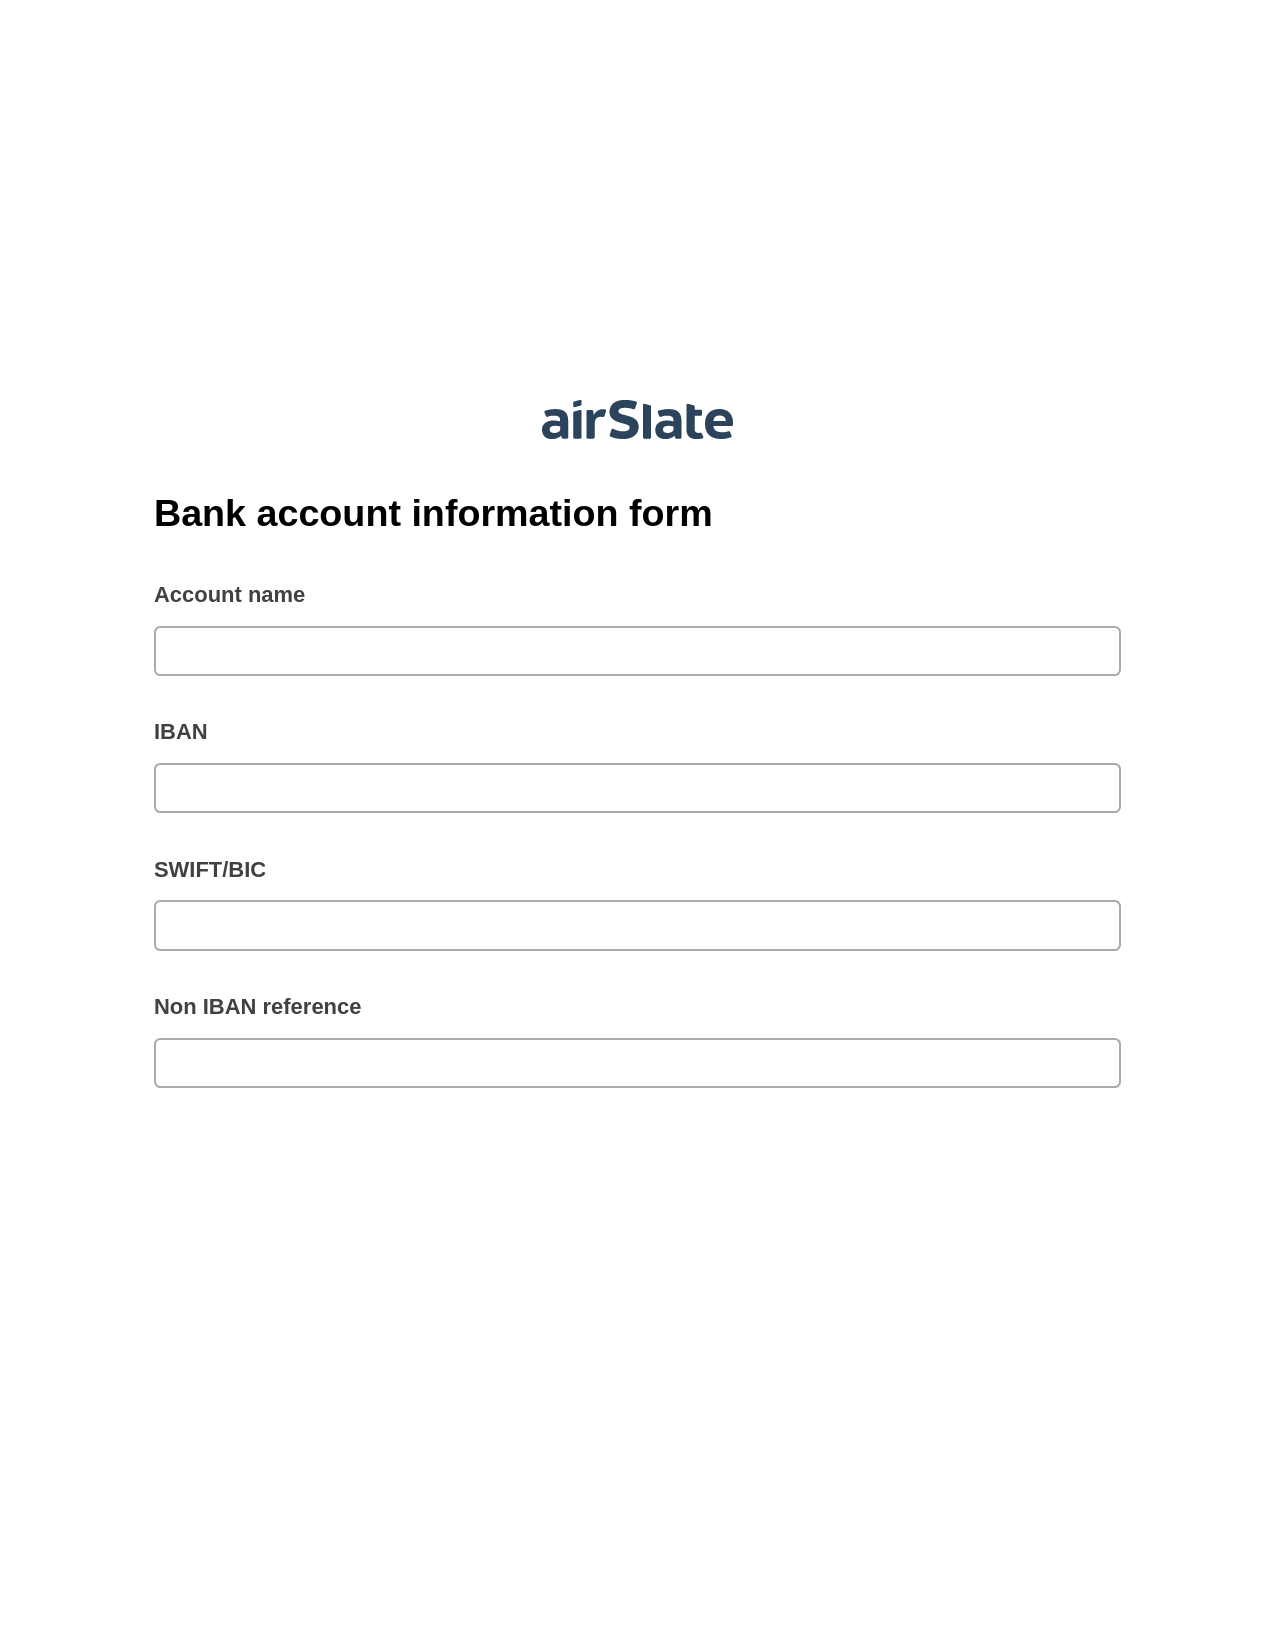 Multirole Bank account information form Pre-fill Slate from MS Dynamics 365 Records Bot, Google Cloud Print Bot, Webhook Postfinish Bot